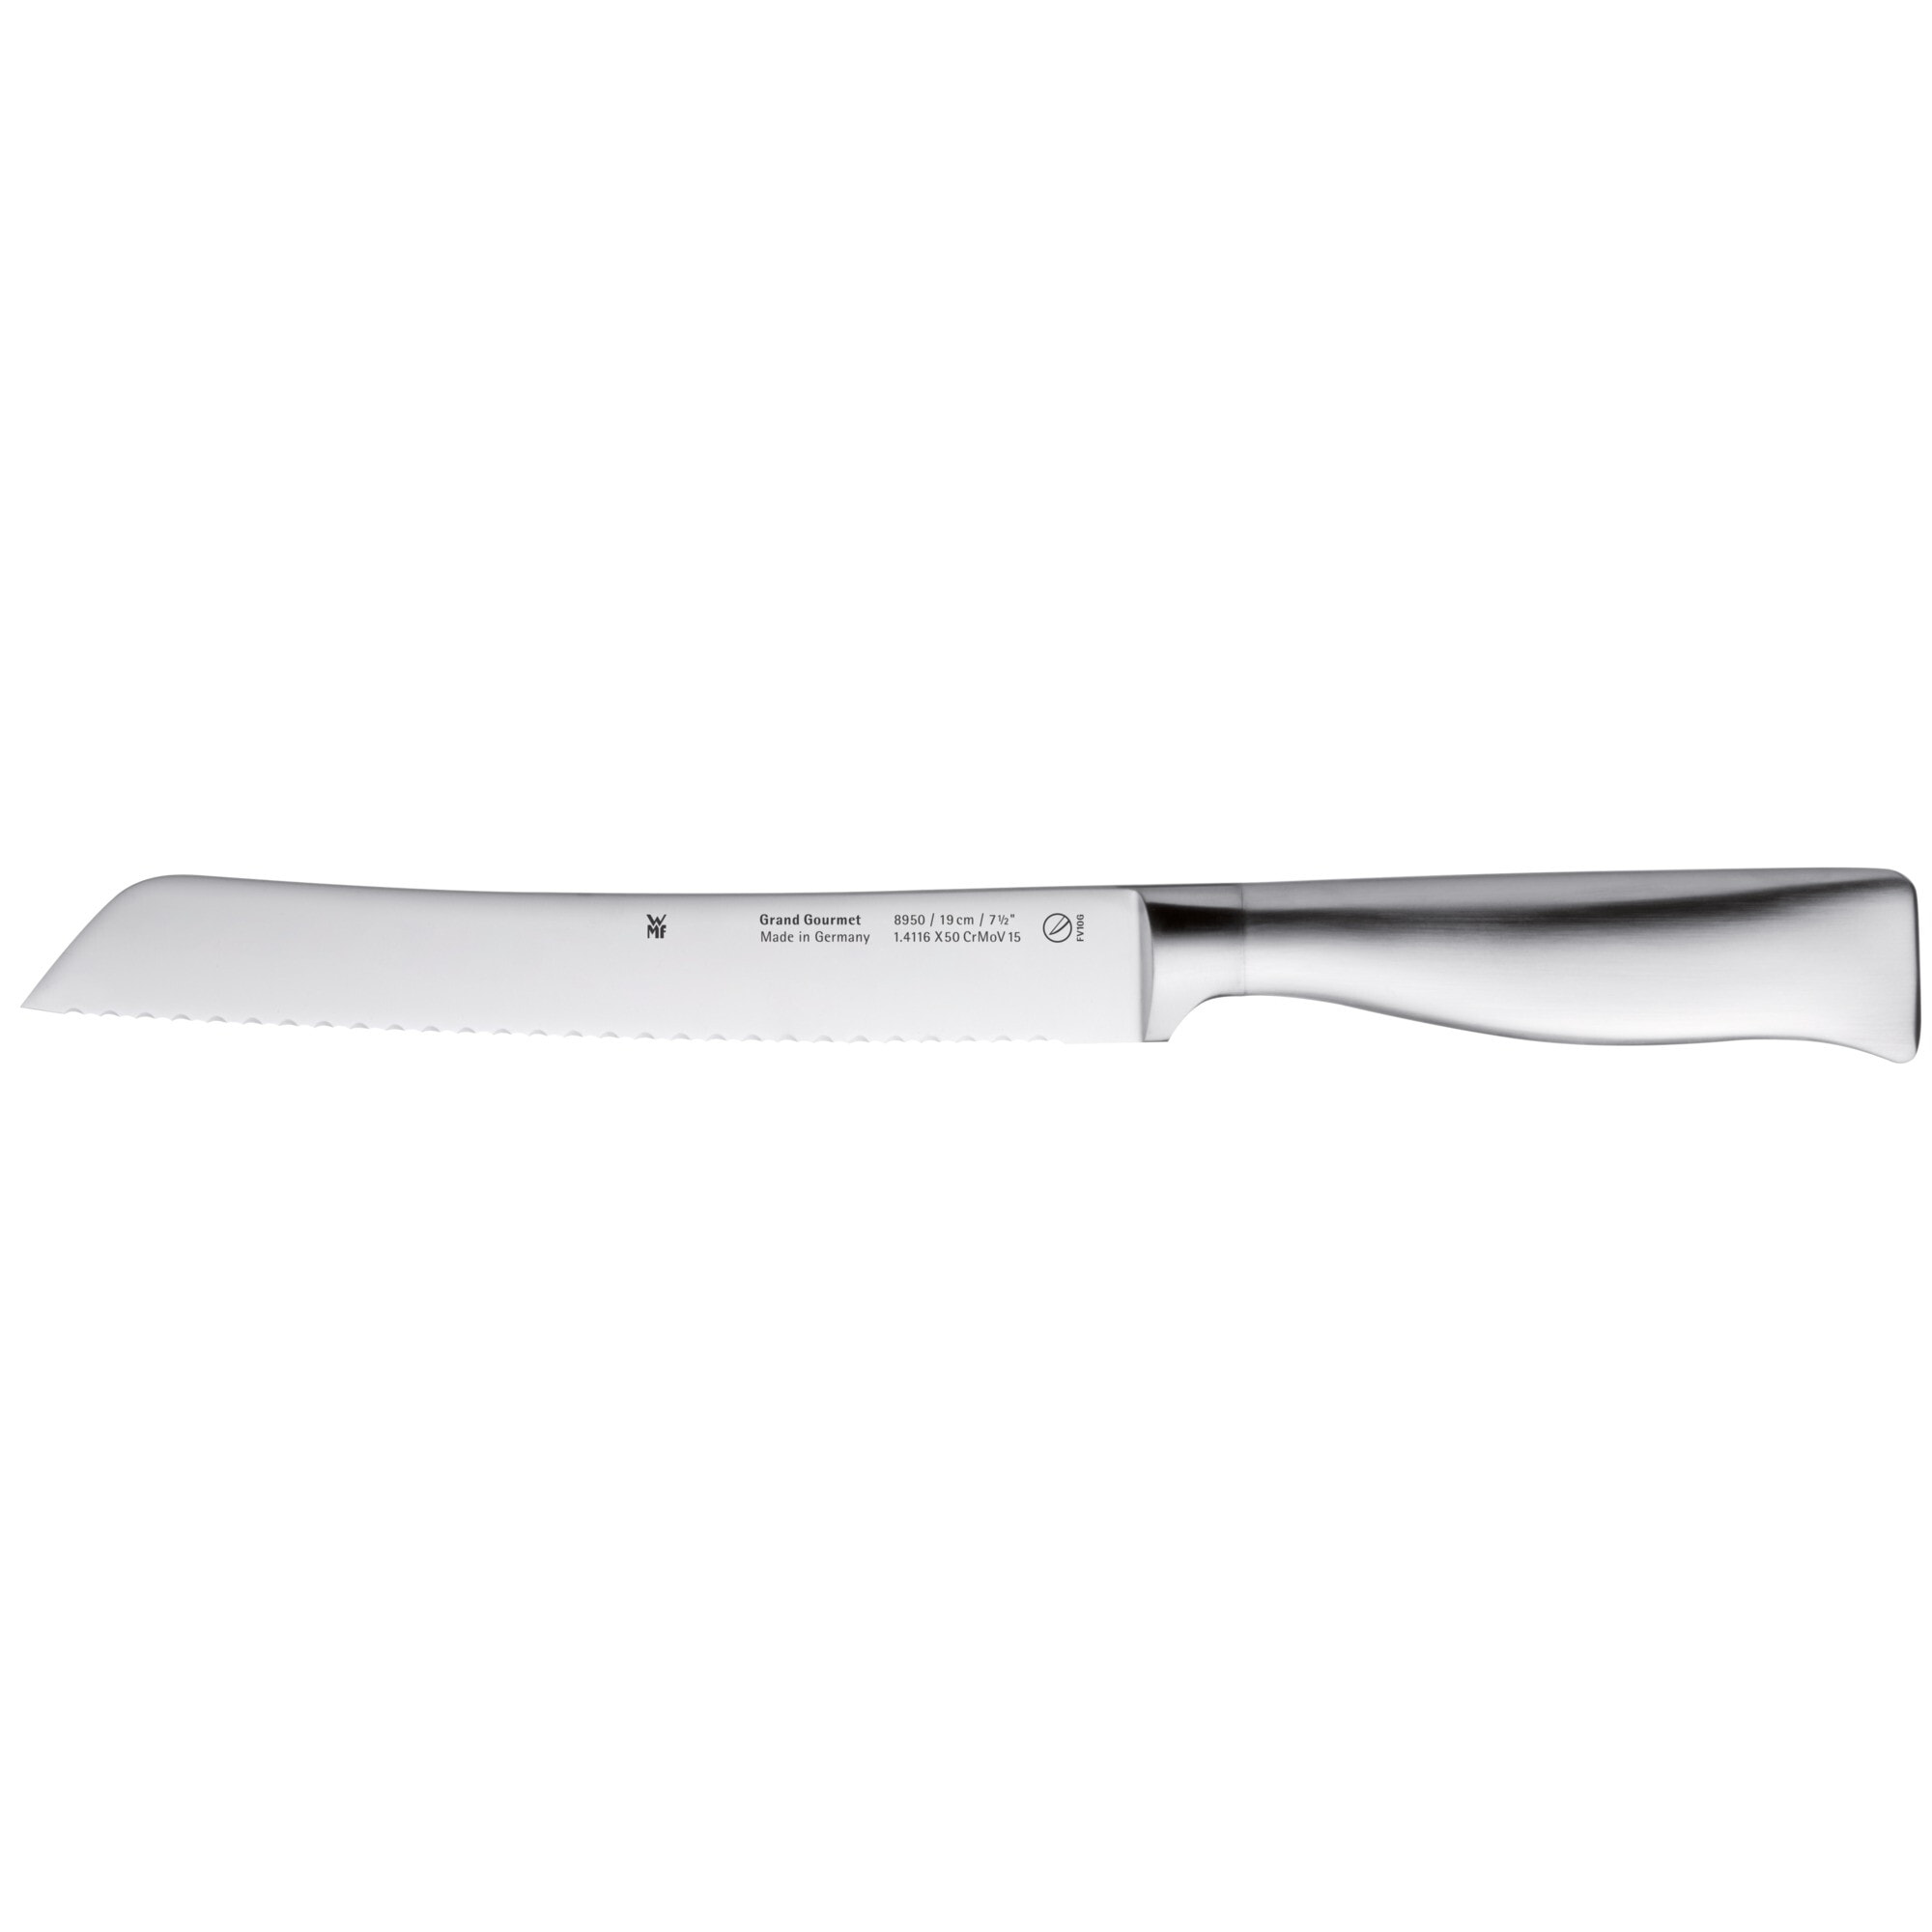 WMF Grand Gourmet 18.8950.6032 кухонный нож Стальной 1 шт Хлебный нож